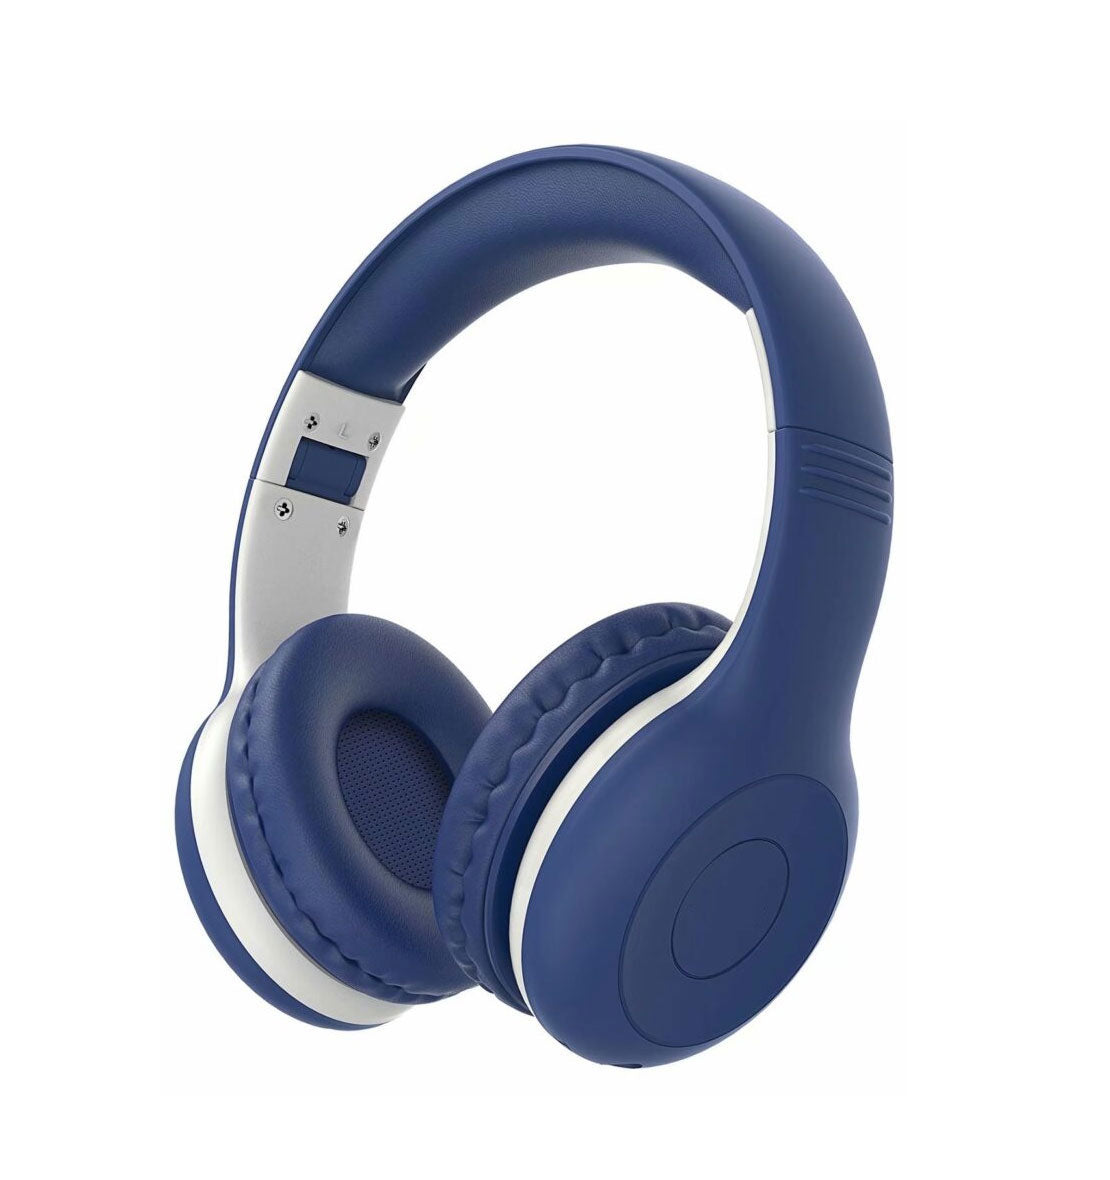 blue beats headphones wireless